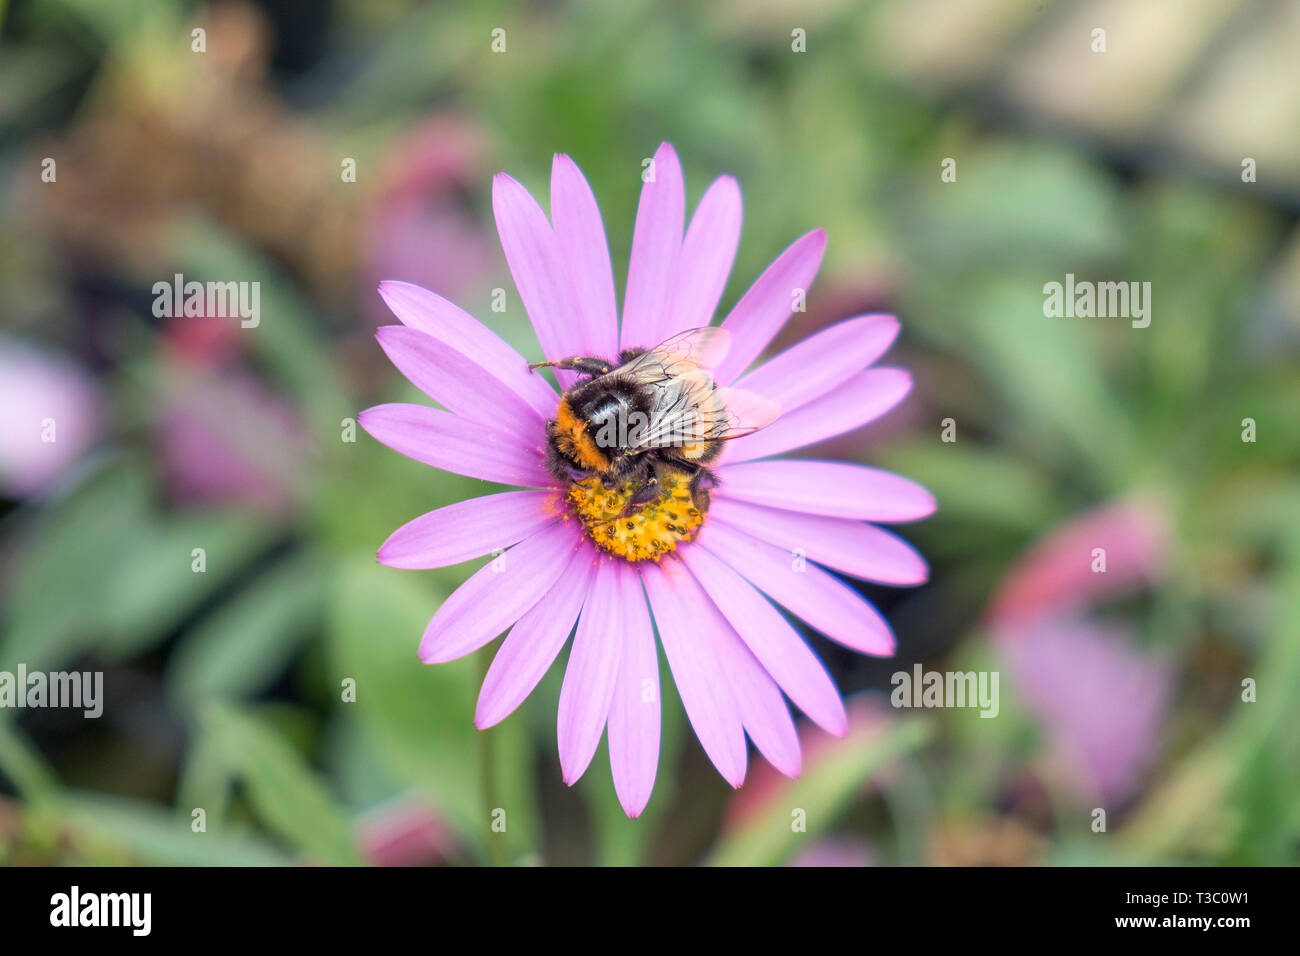 A Bumblebee collecting nectar from the flower of Osteospermum jucundum var. compactum. Stock Photo